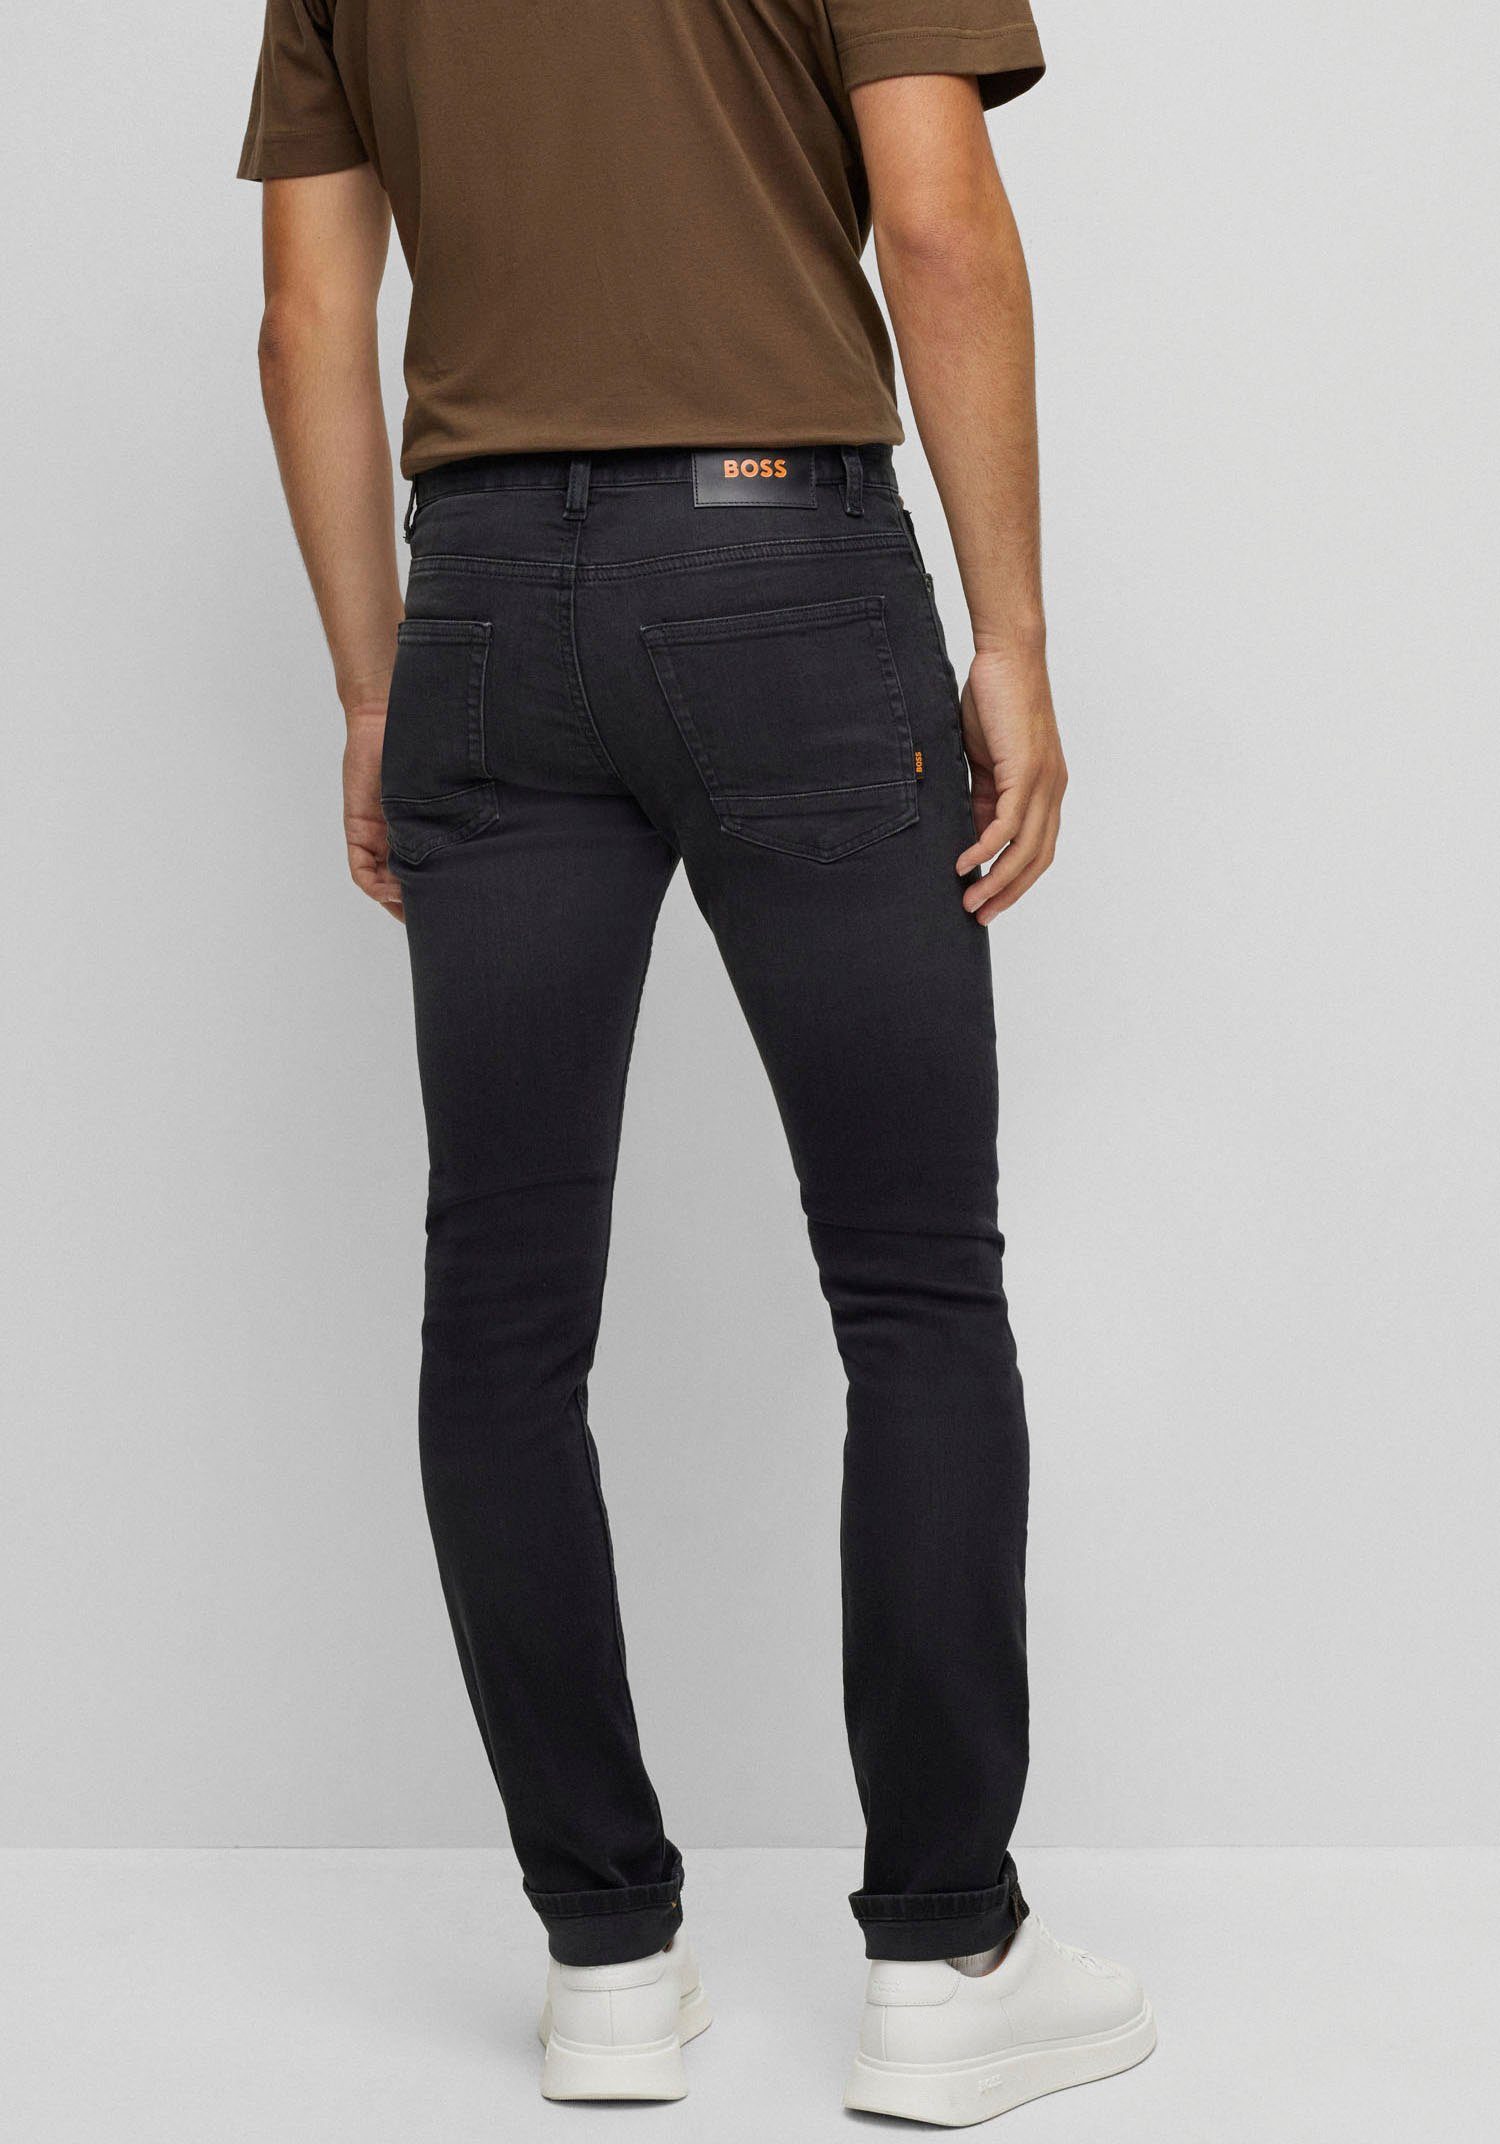 Delaware ORANGE Slim-fit-Jeans aus BOSS Super-Stretch-Denim